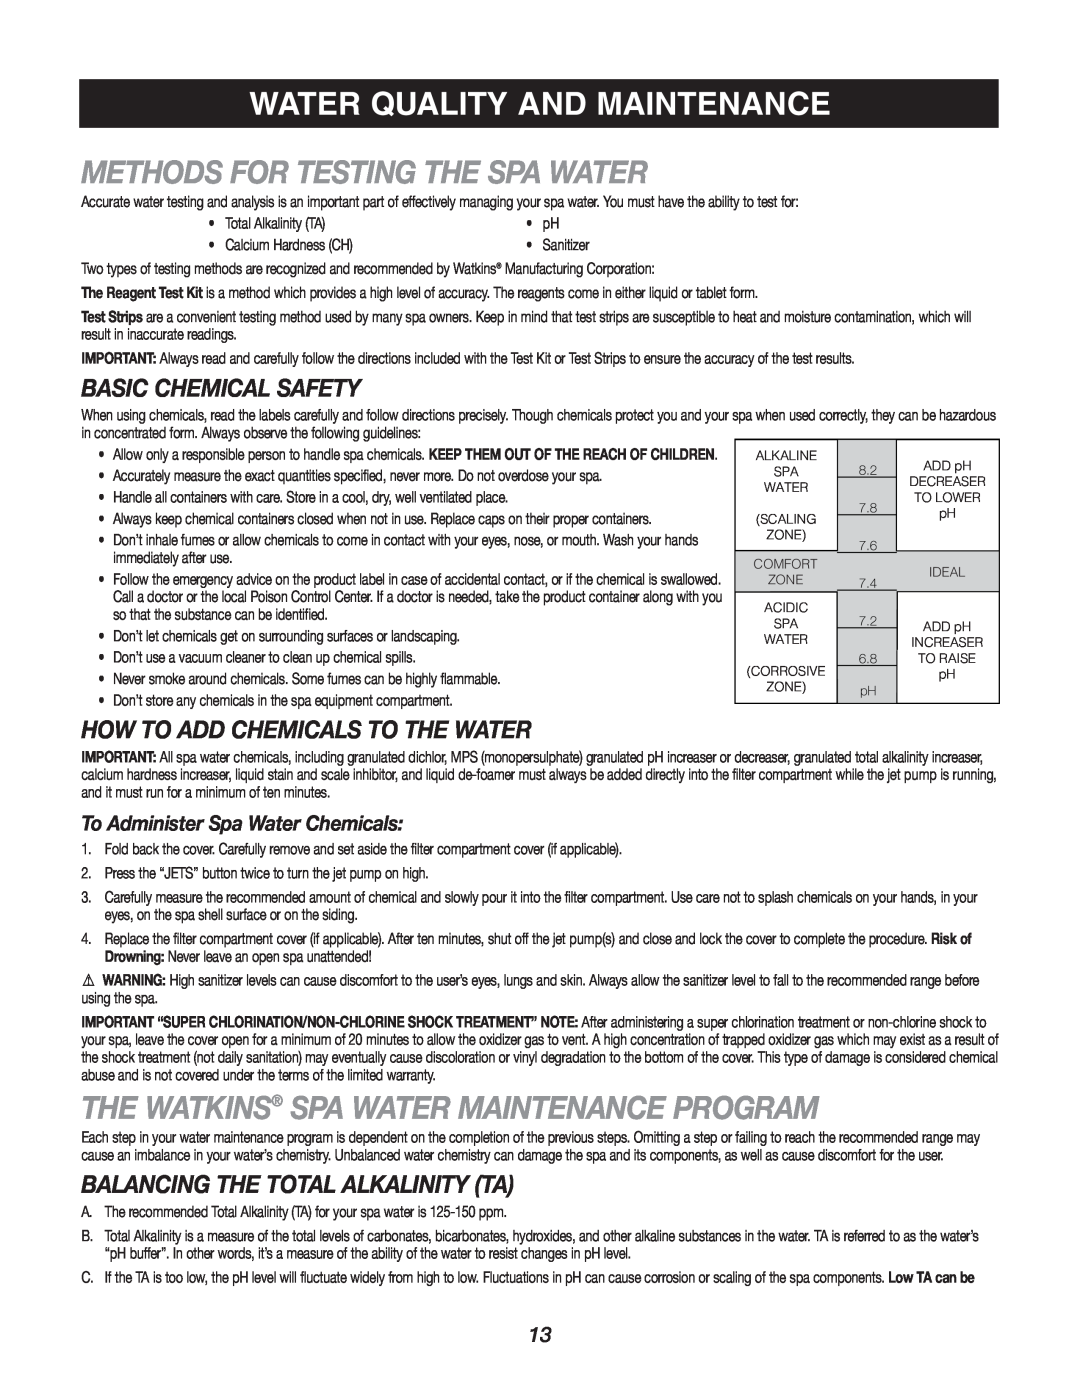 Caldera Highland Series owner manual Methods For Testing The Spa Water, The Watkins Spa Water Maintenance Program 